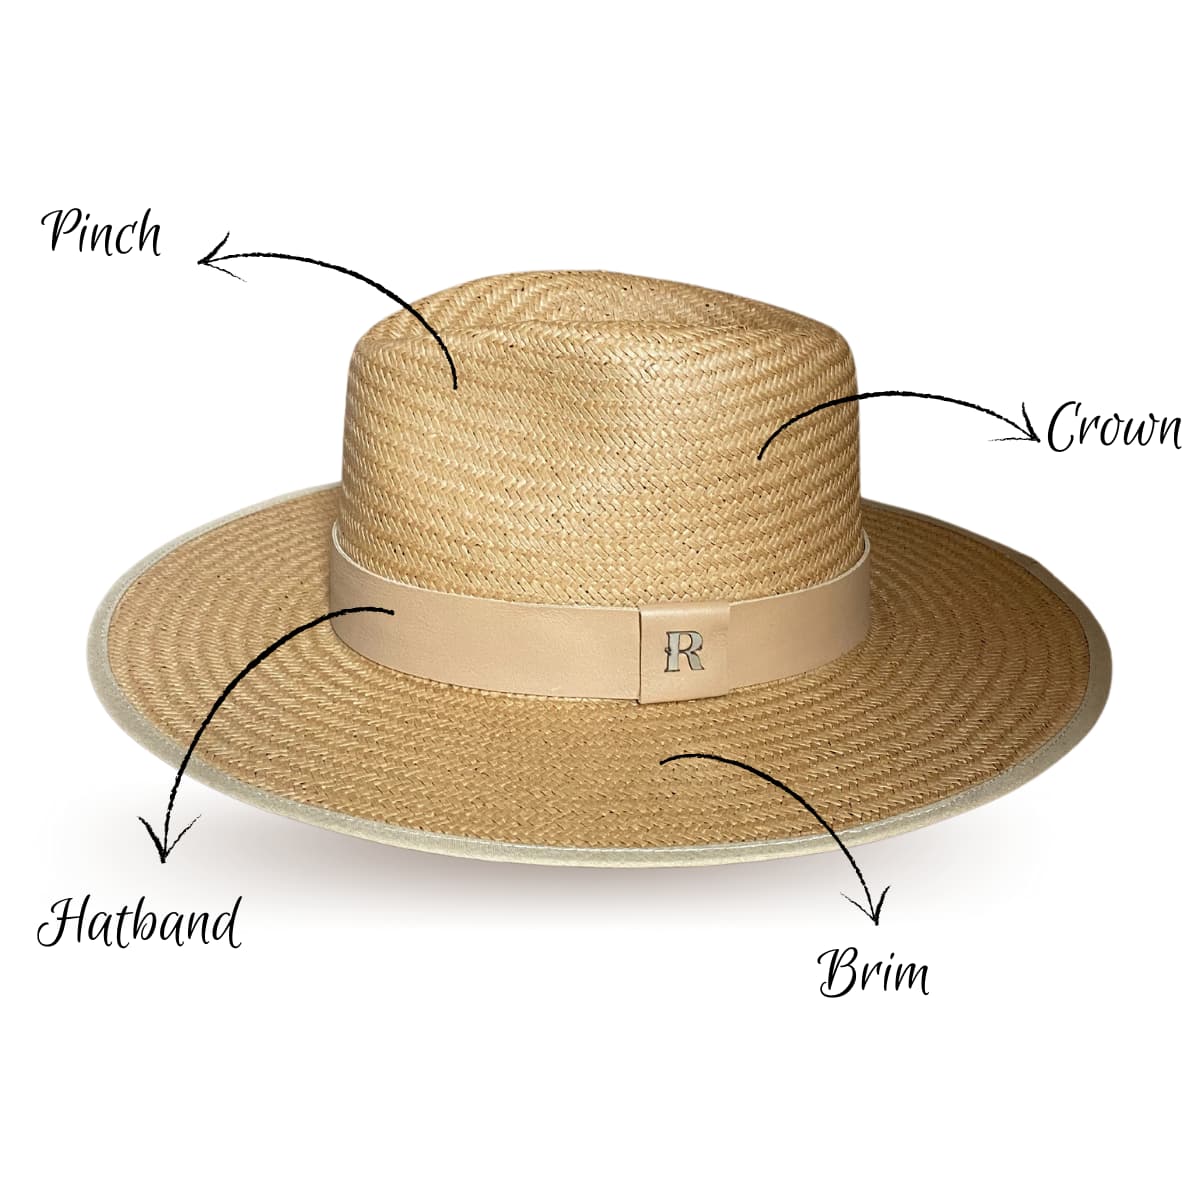 Comprar Sombrero Paja Florida Negro - Sombrero Fedora - Raceu Hats Online